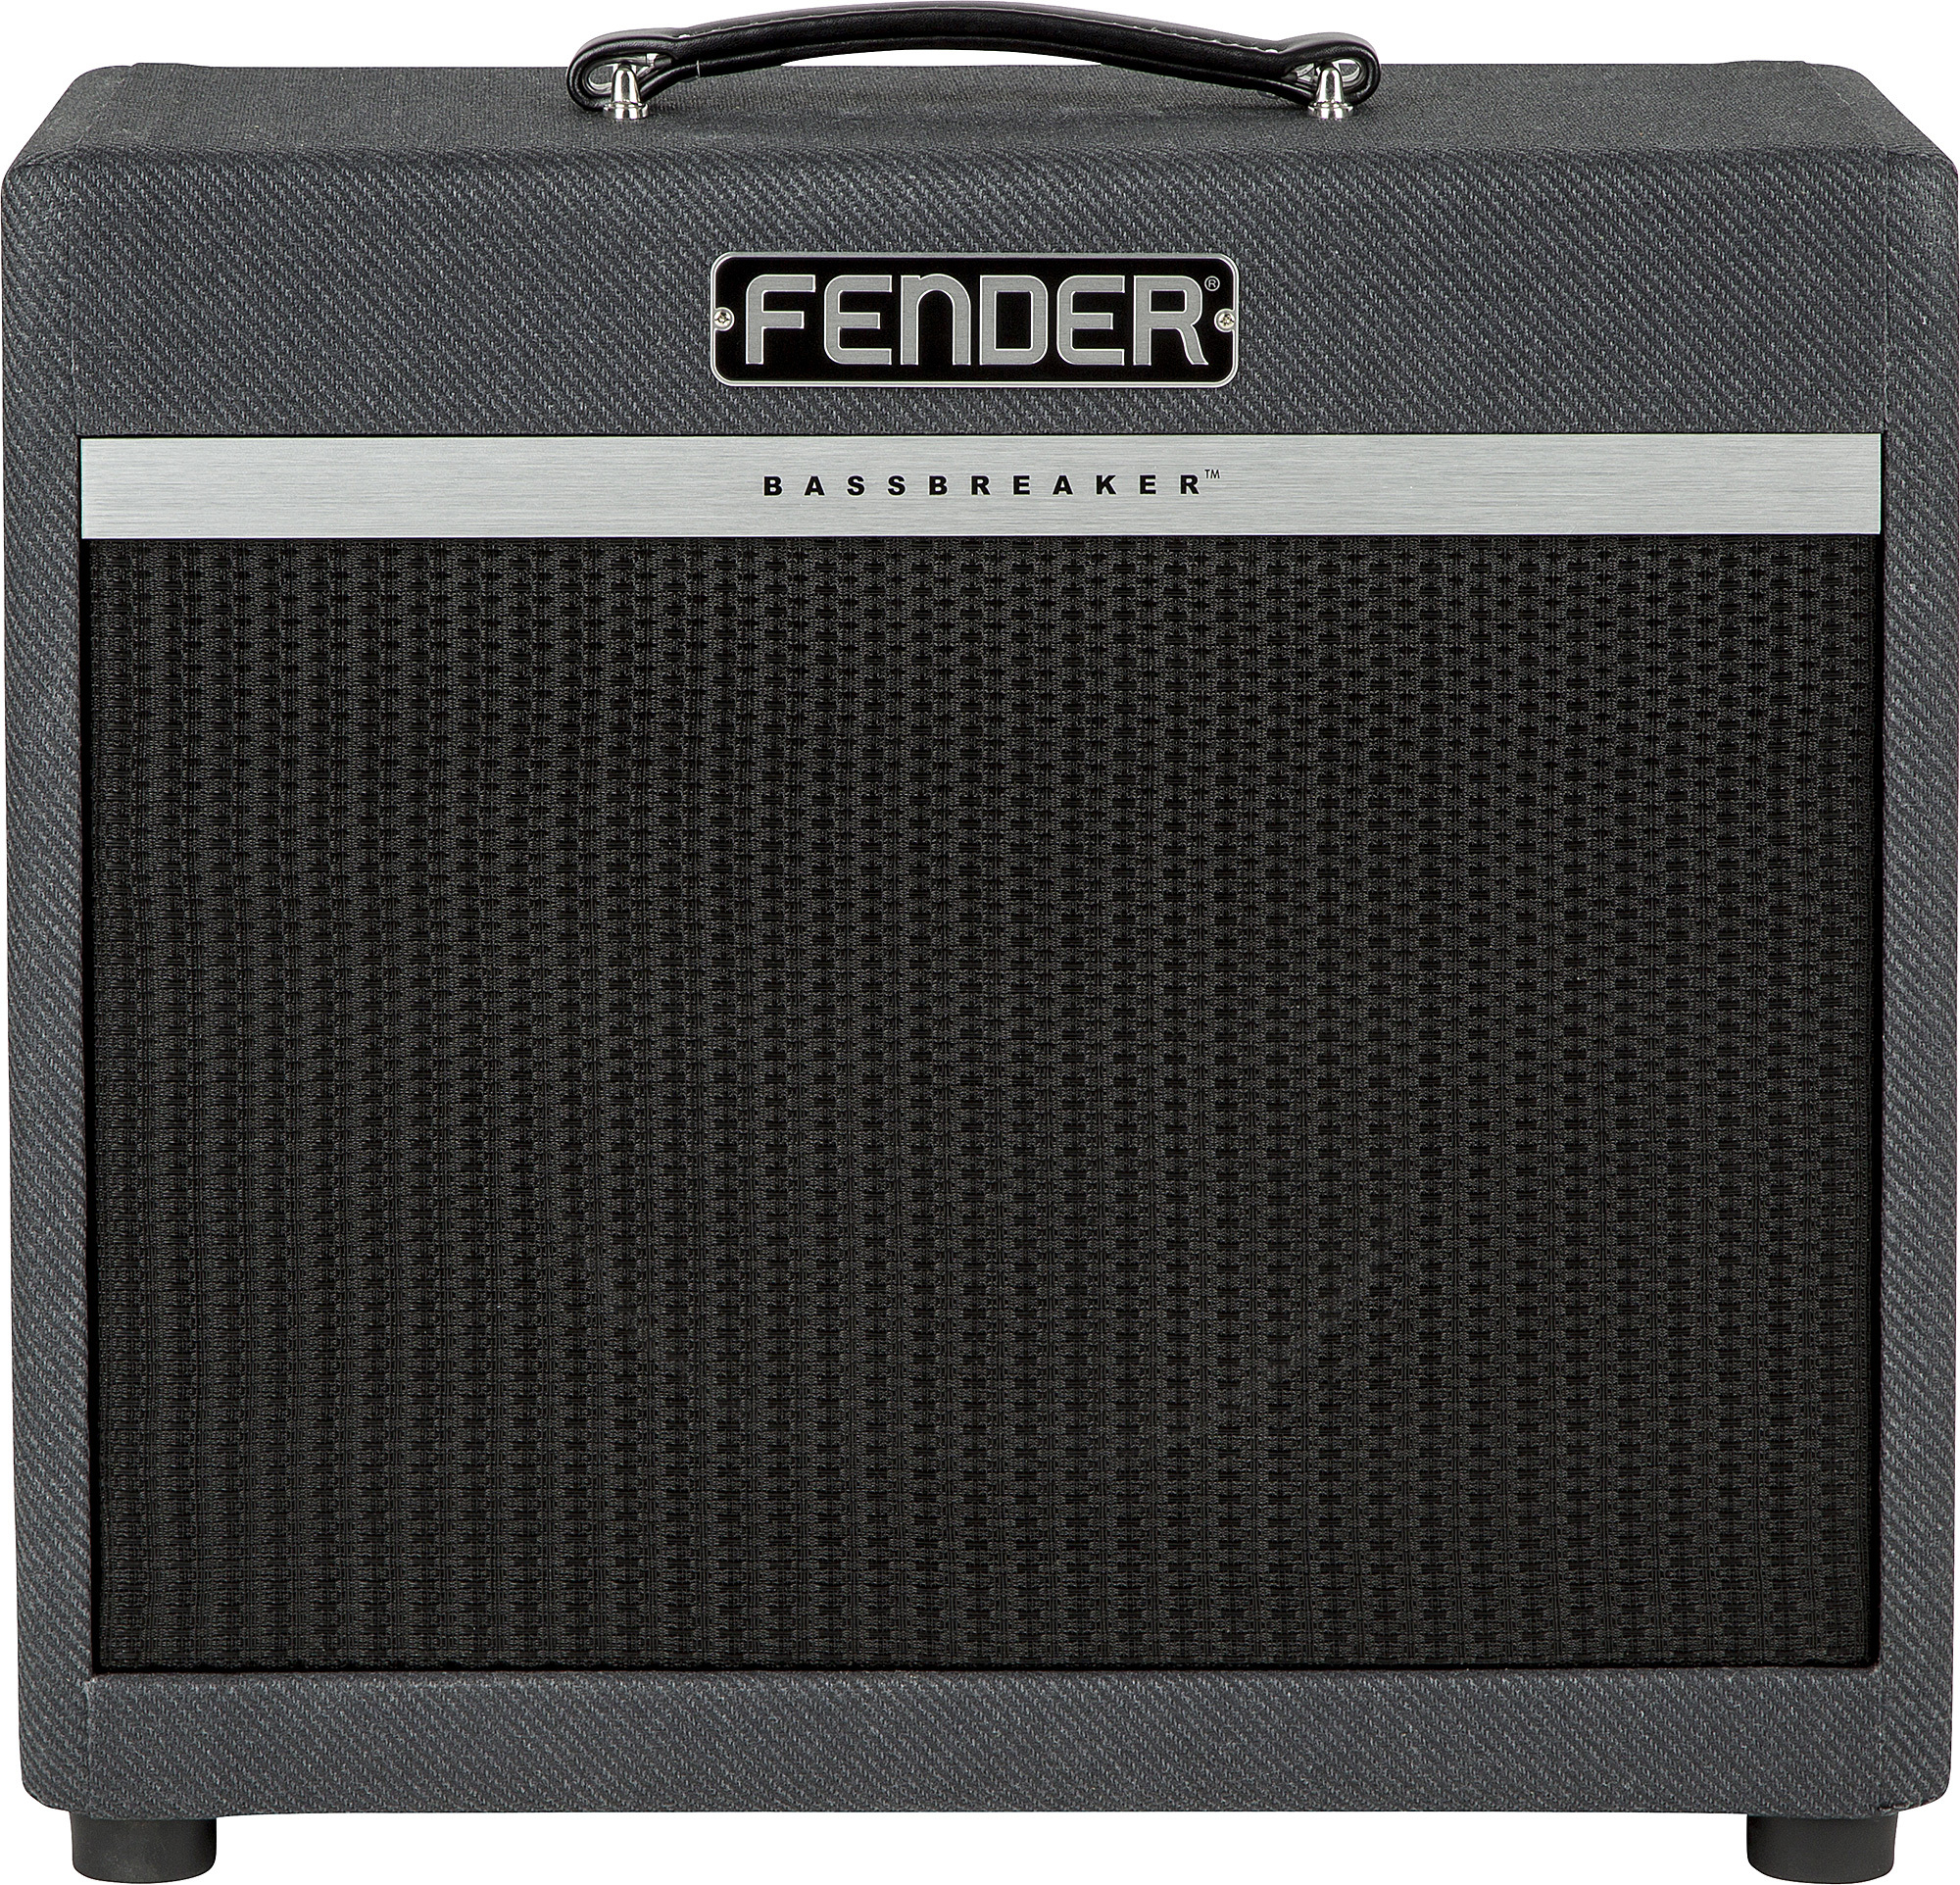 Fender Bassbreaker Bb-112 Enclosure 1x12 70w 8 Ohms Gray Tweed - Baffle Ampli Guitare Électrique - Main picture